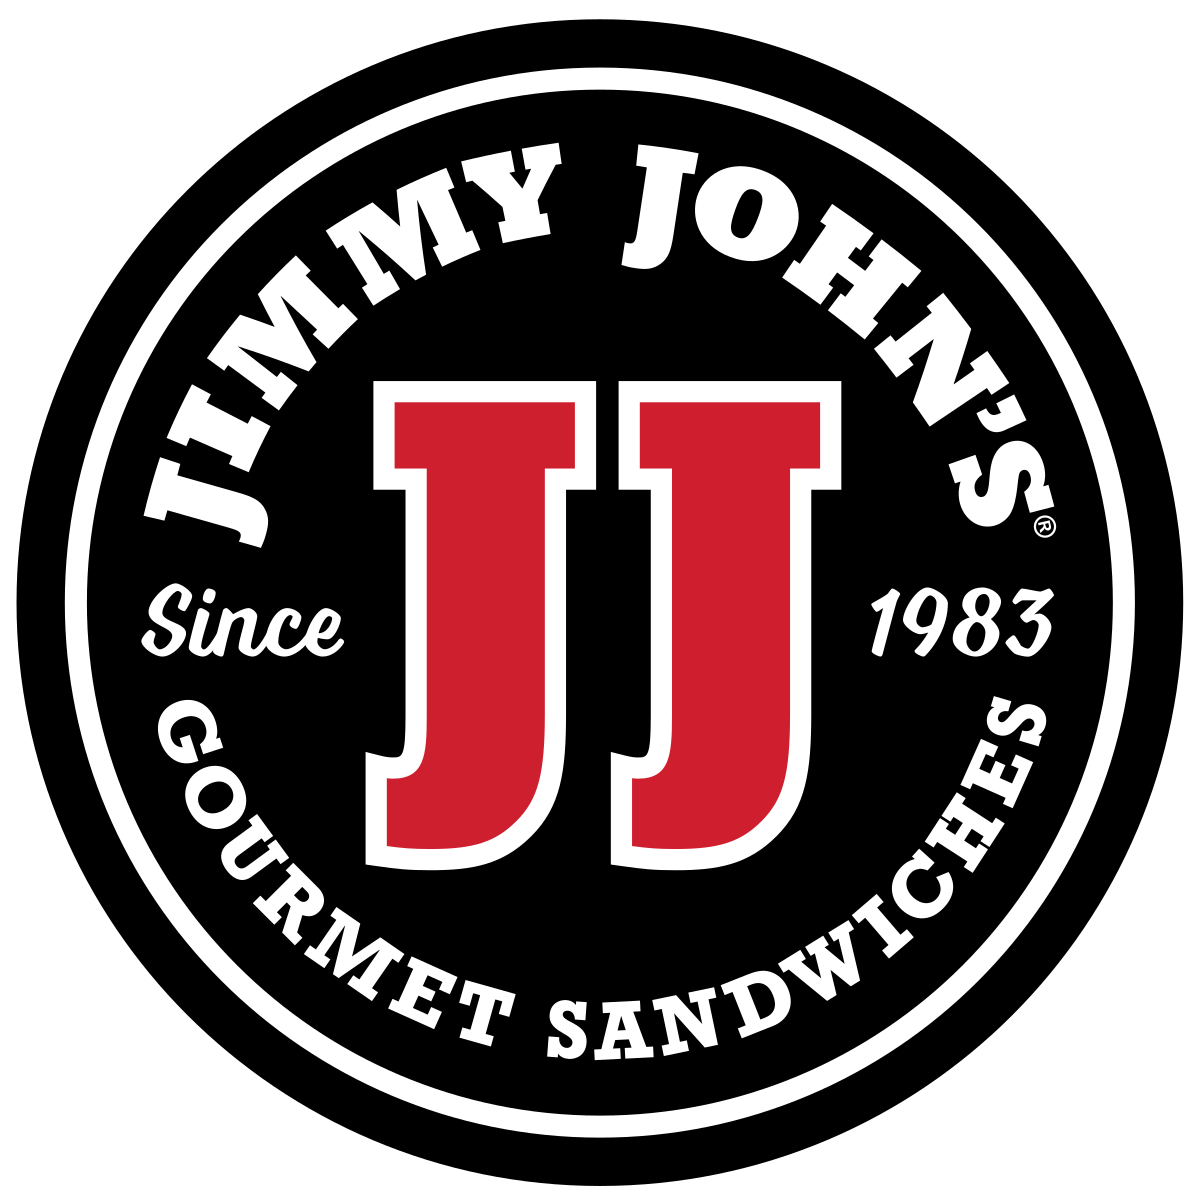 jimmy johns logo